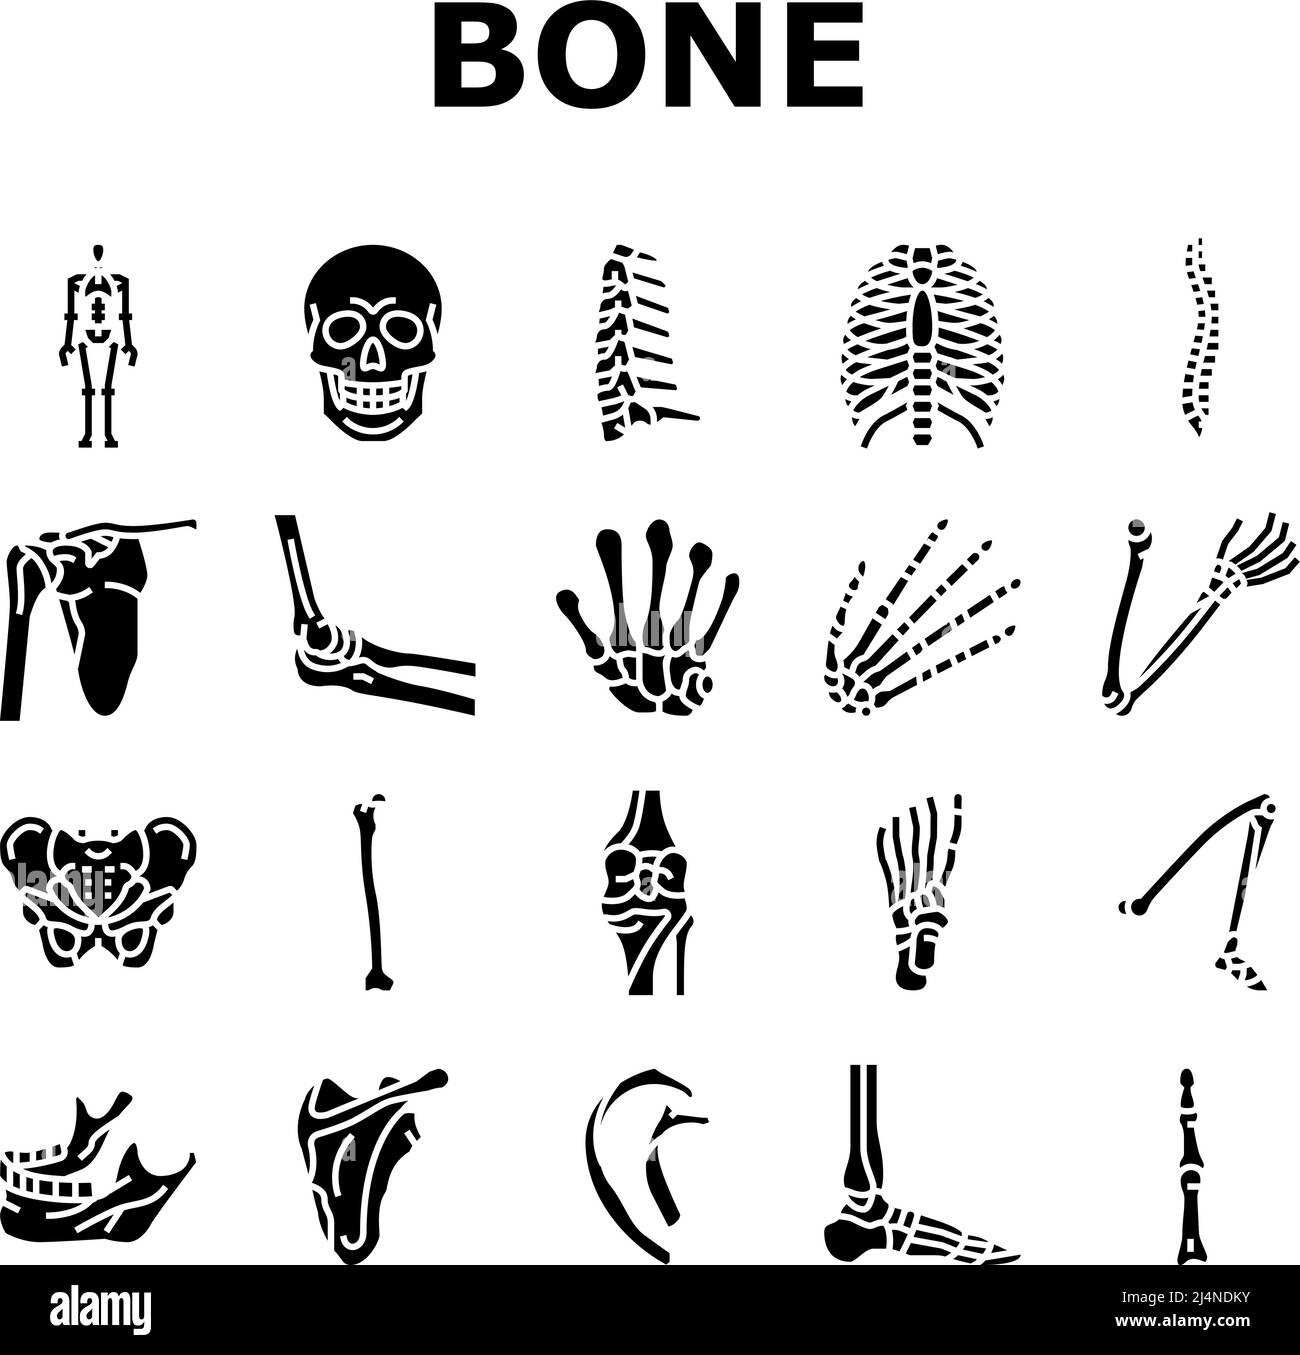 Bone Human Skeleton Structure Icons Set Vector Stock Vector Image & Art ...